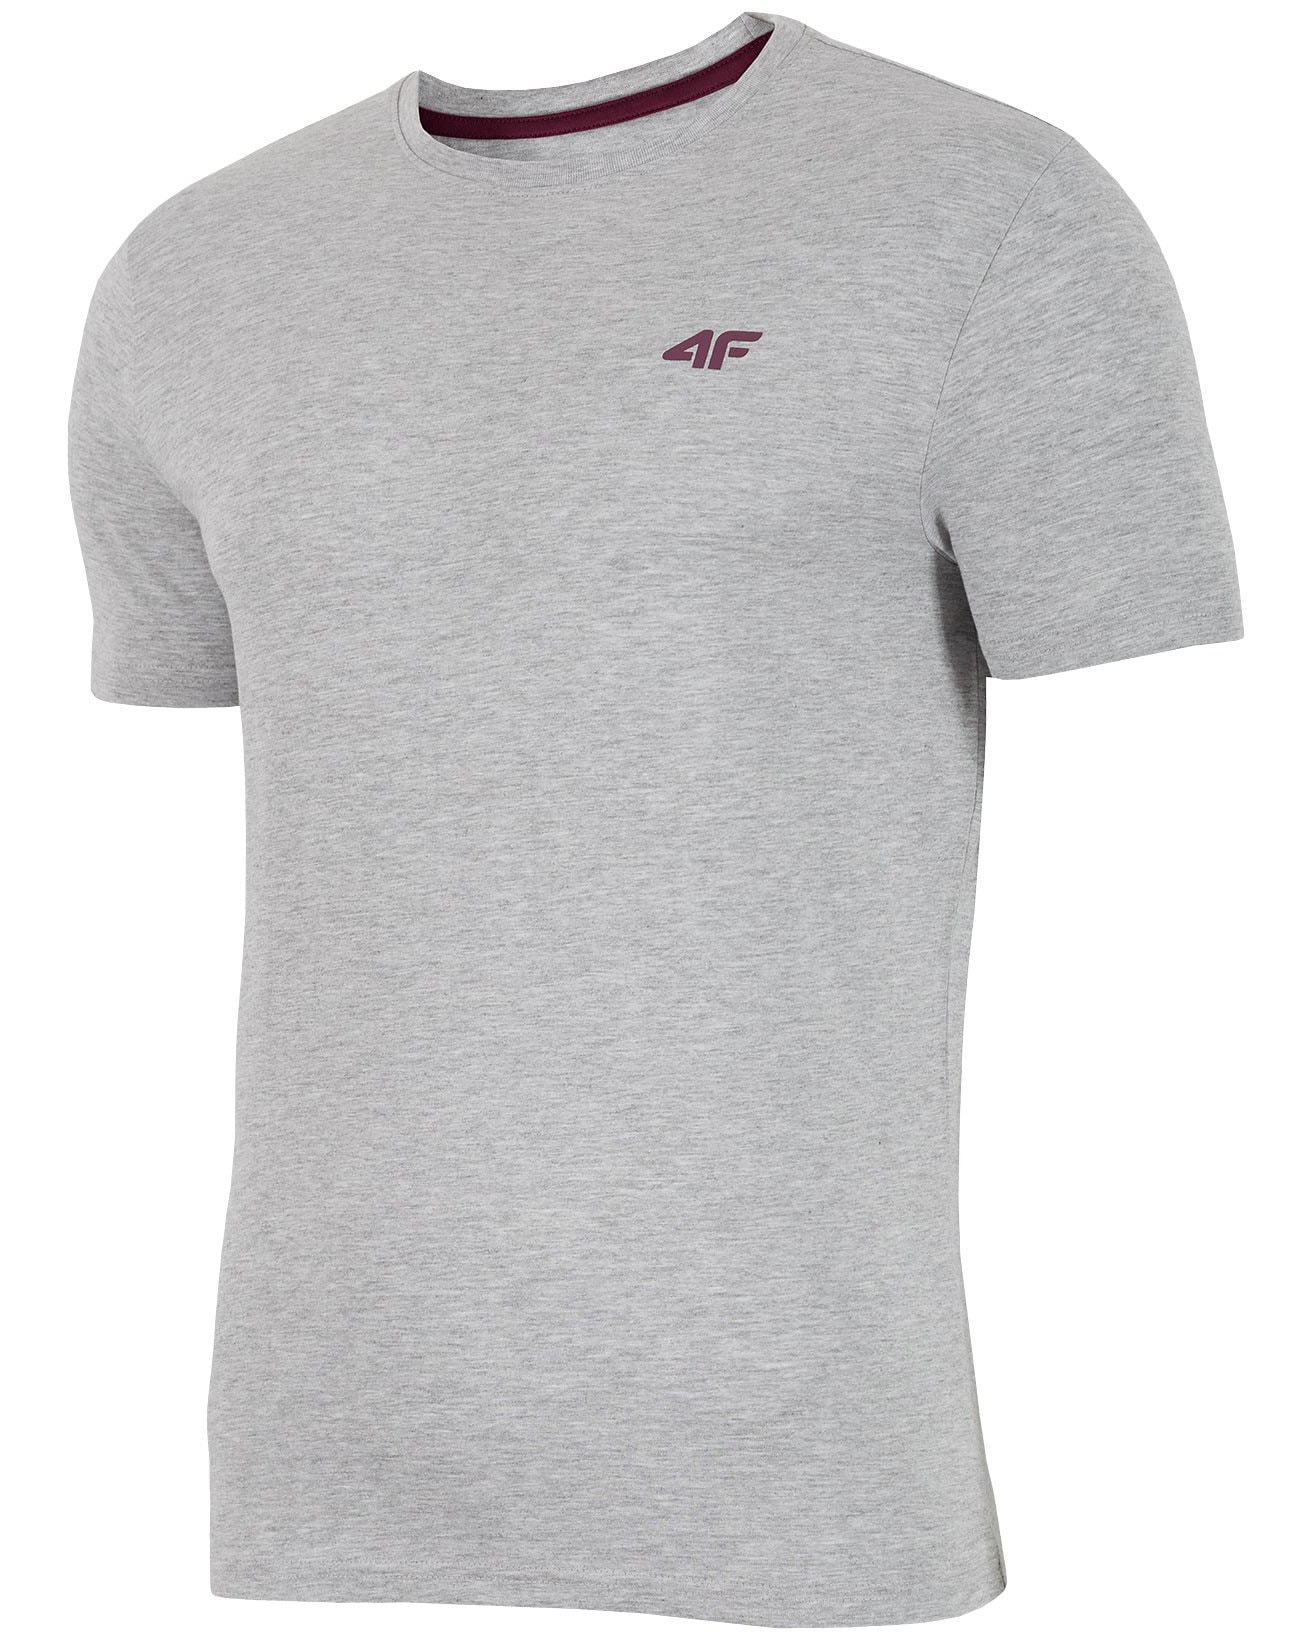 4F Man's T-Shirt - Light Grey Melange